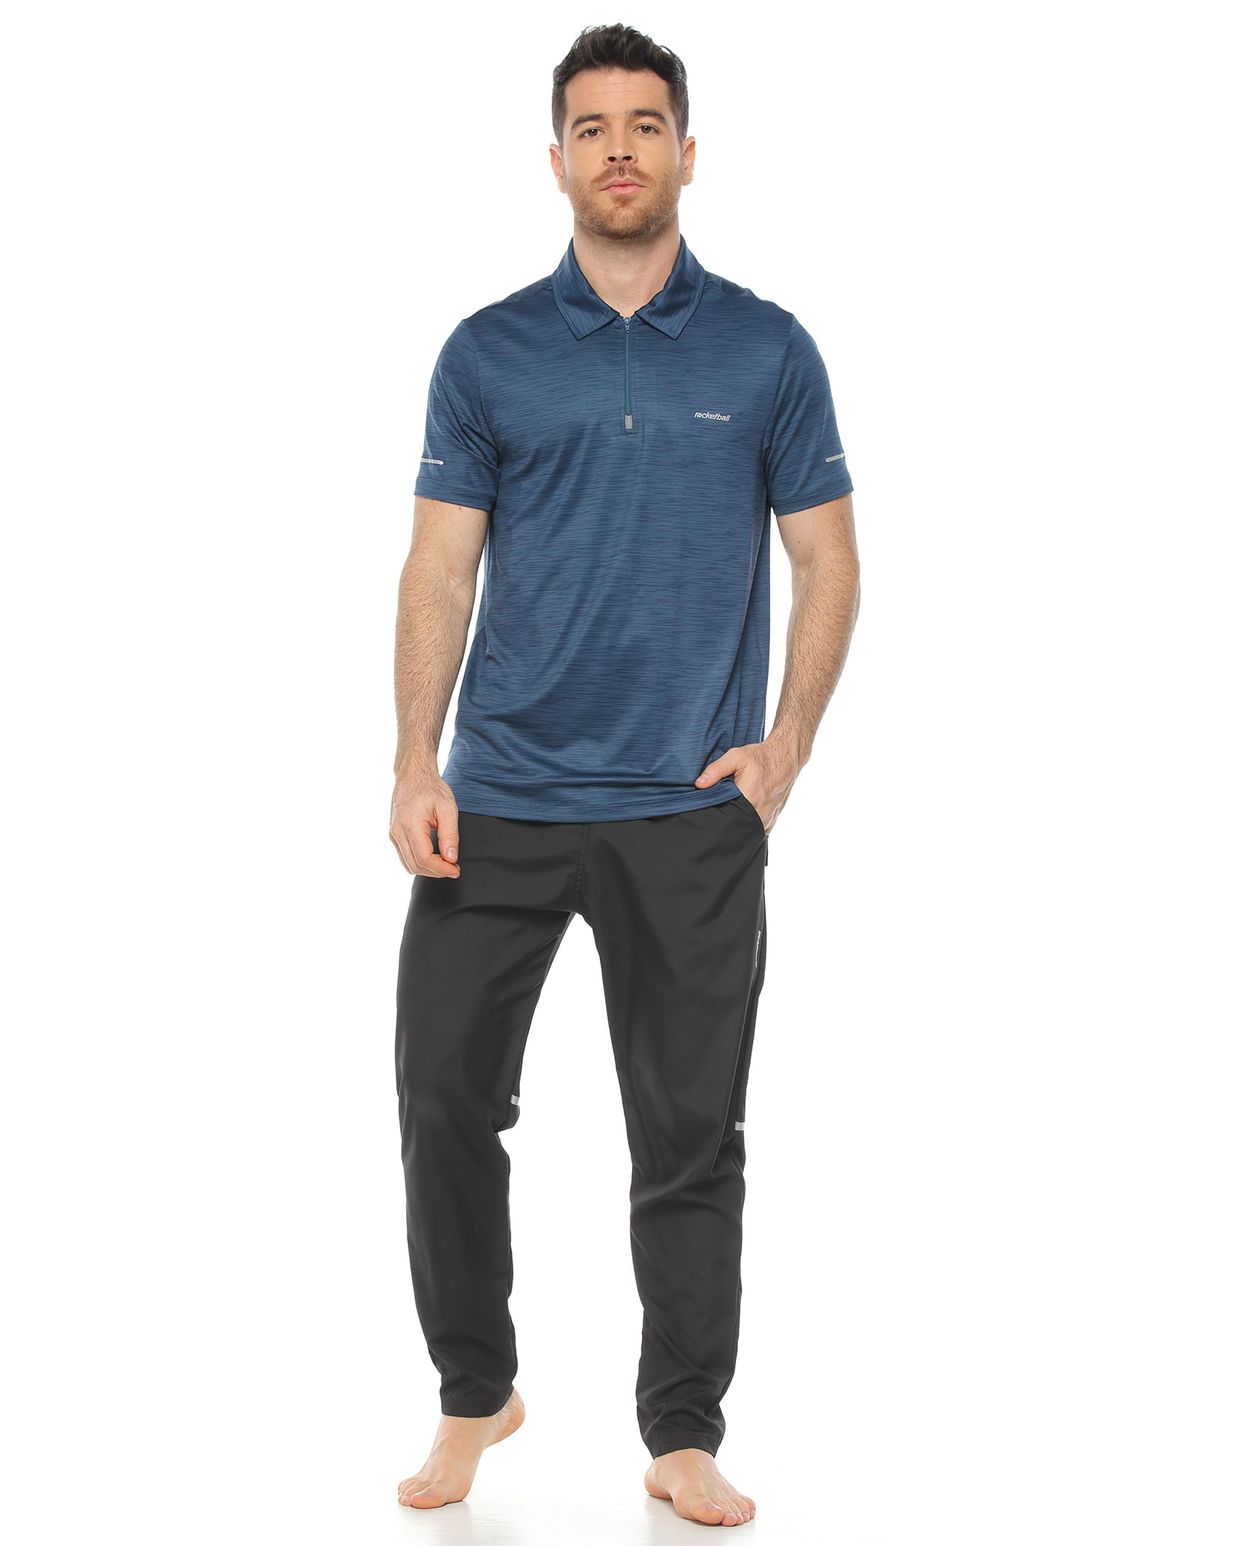 modelo con Pantalón Deportivo Semi Ajustado Negro y camiseta tipo polo para Hombre